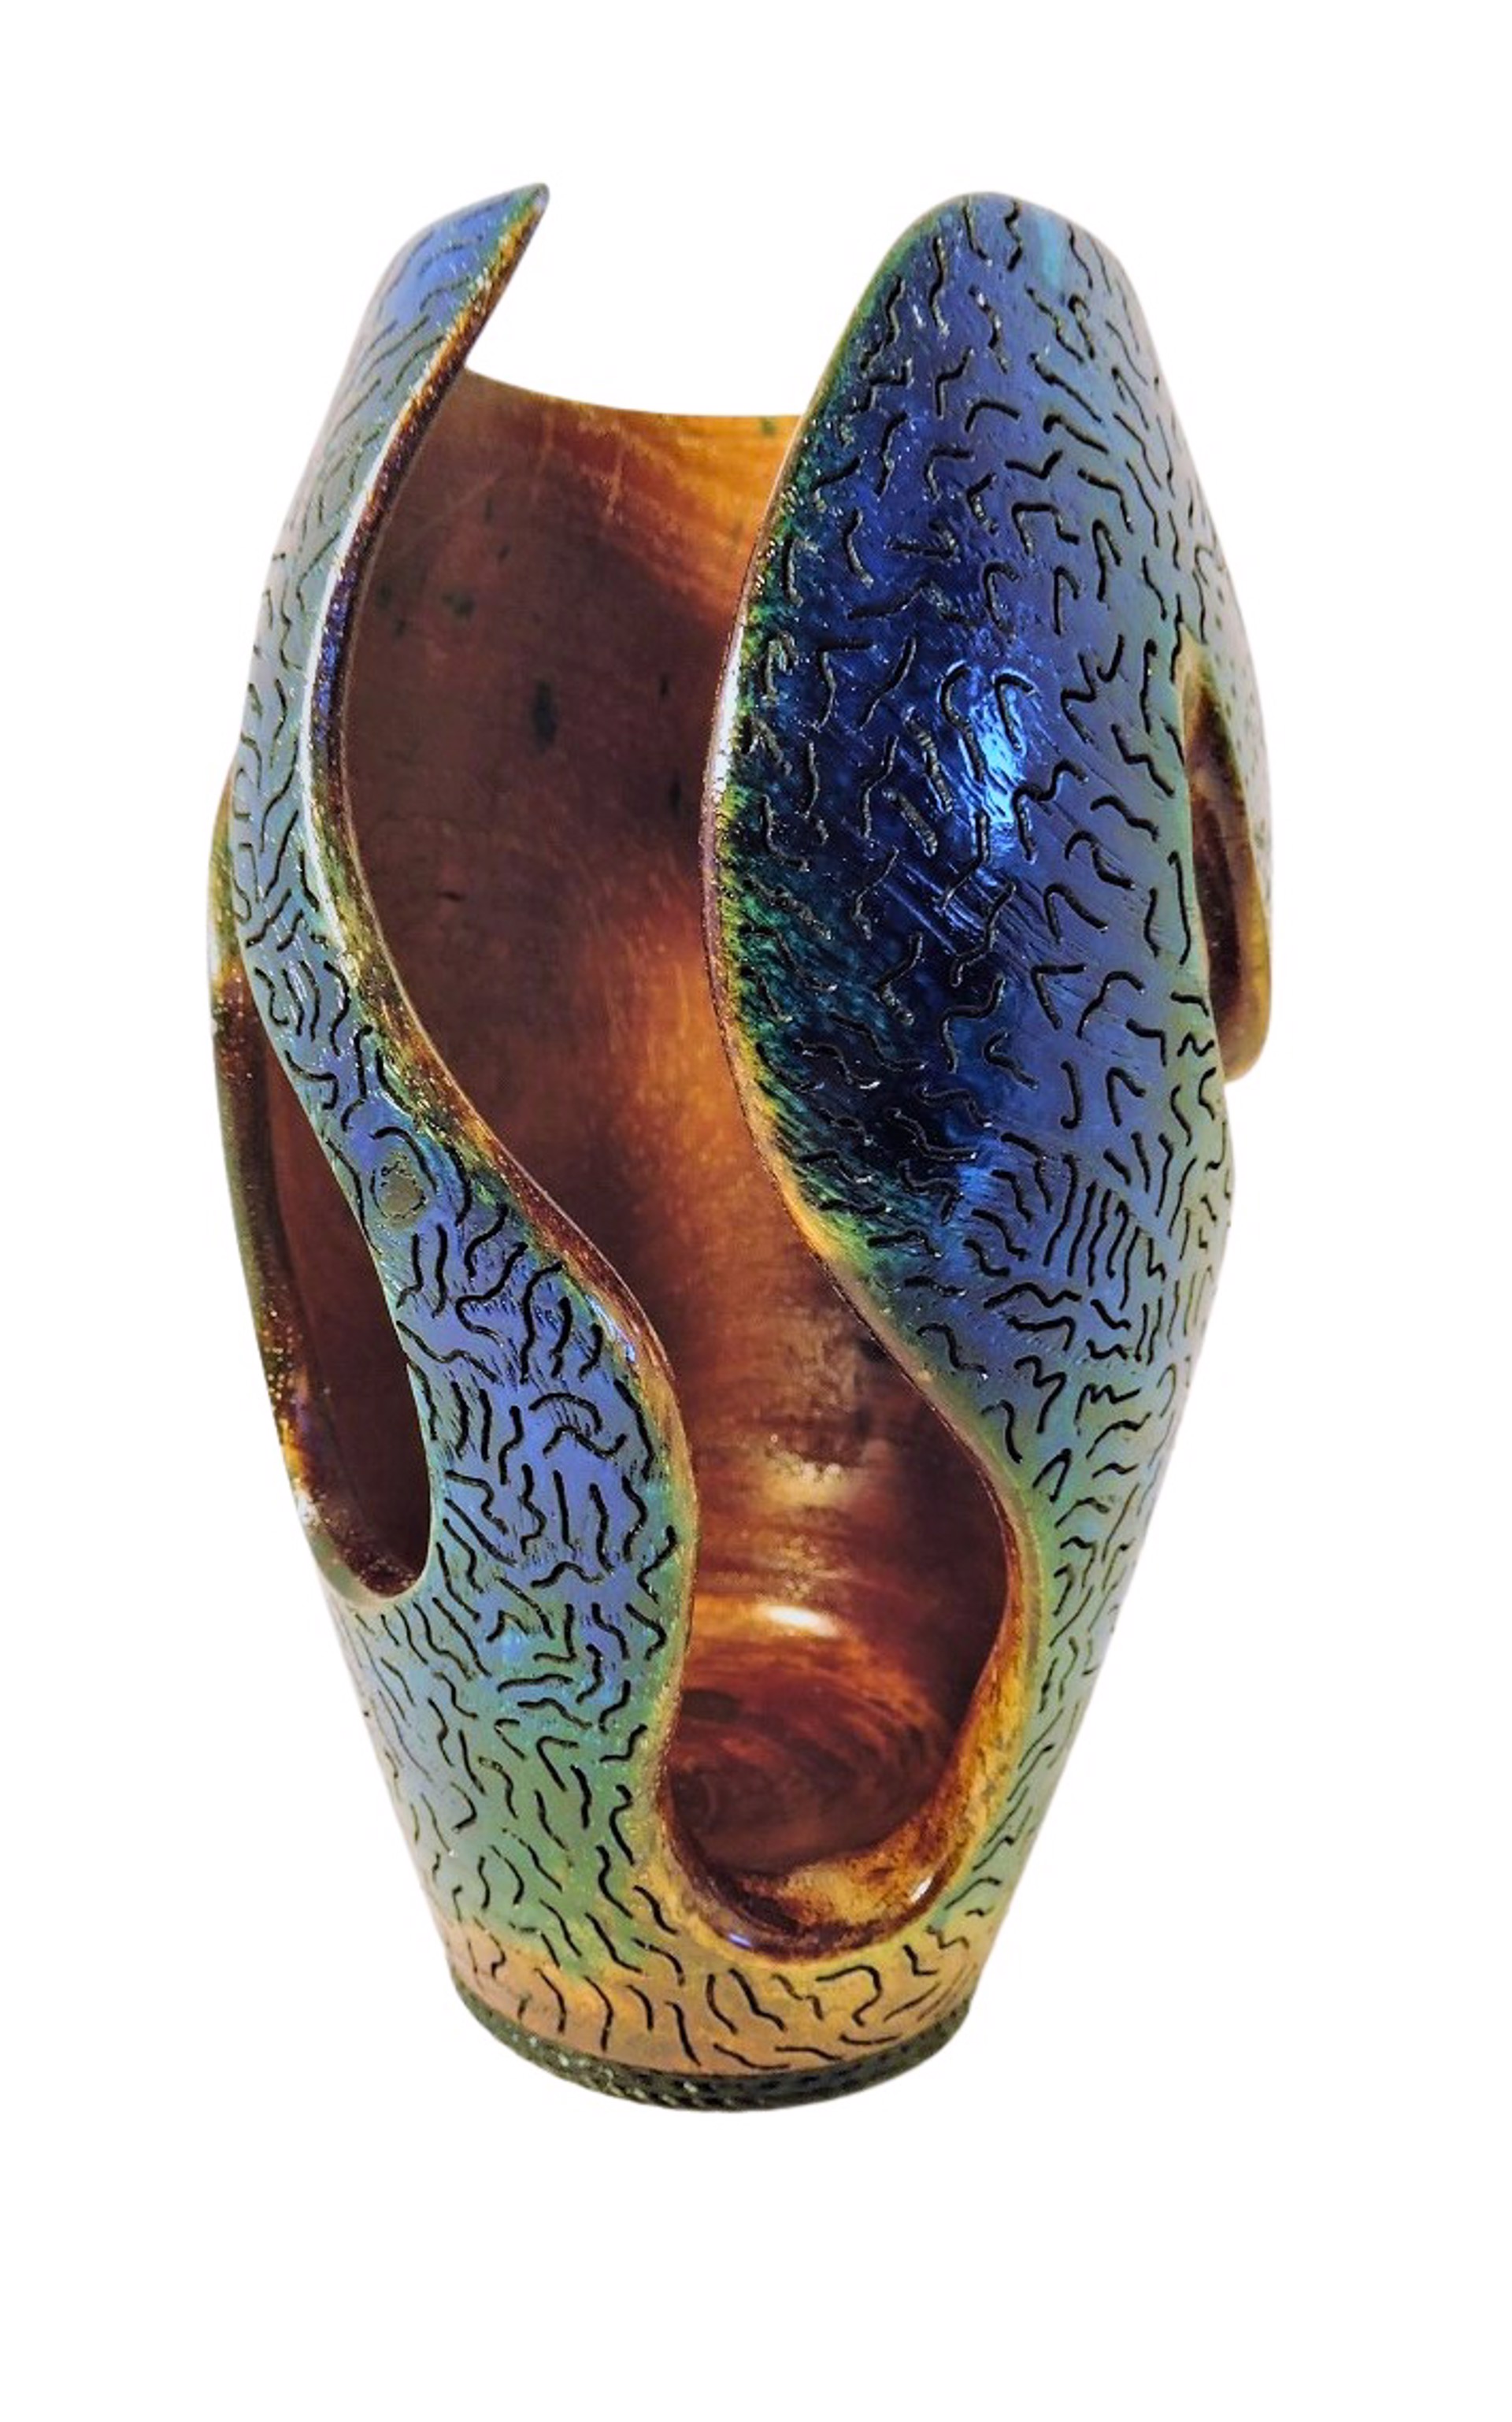 Ocean Sculptured Vase by Jim Scott